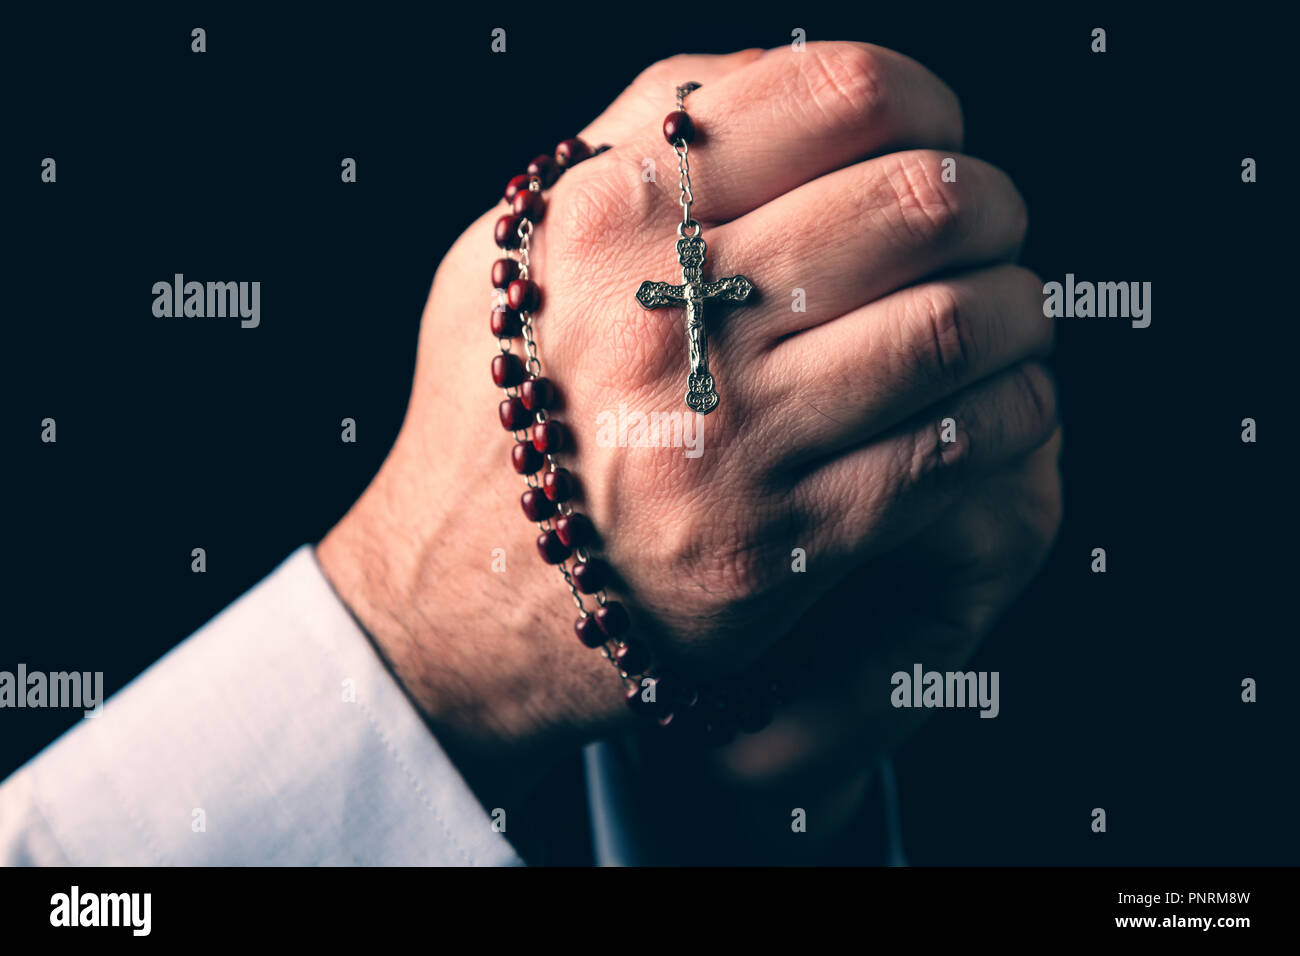 Jesus side profile -Fotos und -Bildmaterial in hoher Auflösung – Alamy